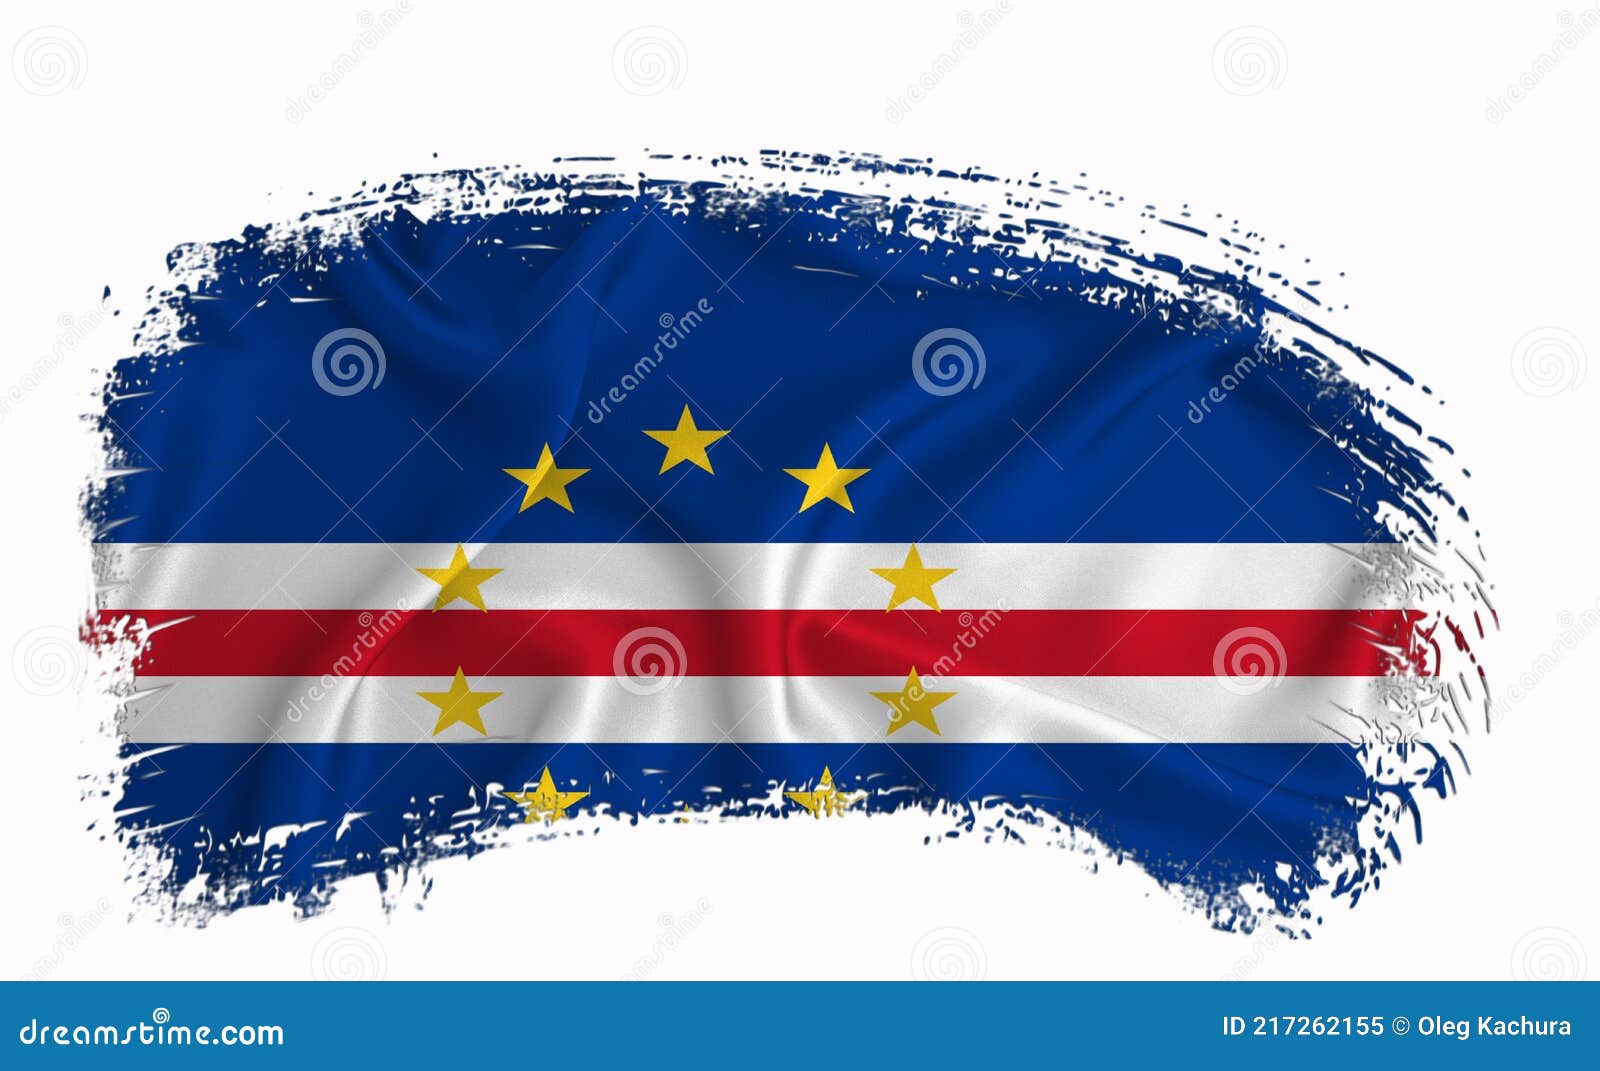 Cabo Verde Flag, Brush Stroke, Typography, Lettering, Logo, Label, Banner  on a White Background Stock Image - Image of print, national: 217262155